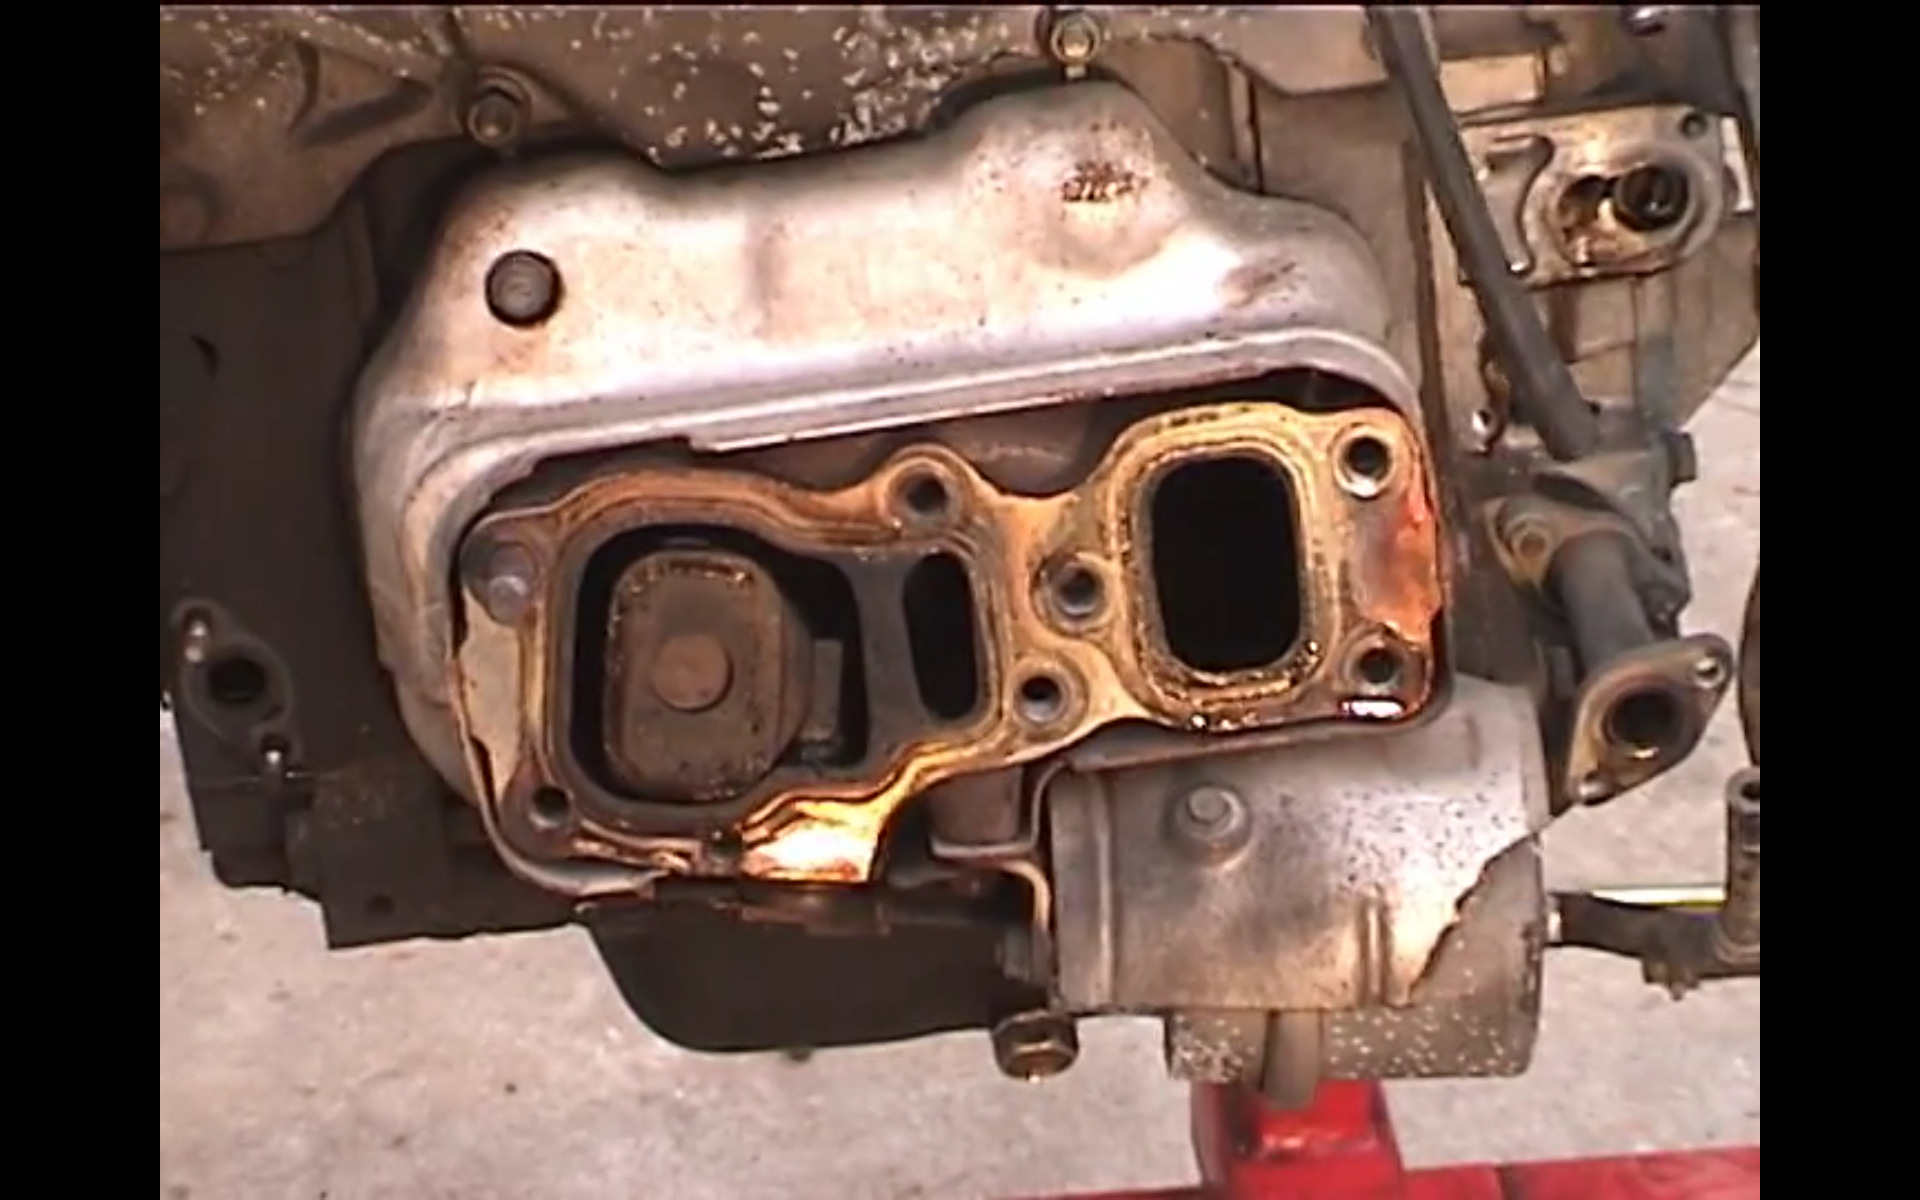 Engine - Exhaust - OEM exhaust manihold heat shield - Used - 1993 to 1995 Mazda RX-7 - Santa Cruz, CA 95060, United States